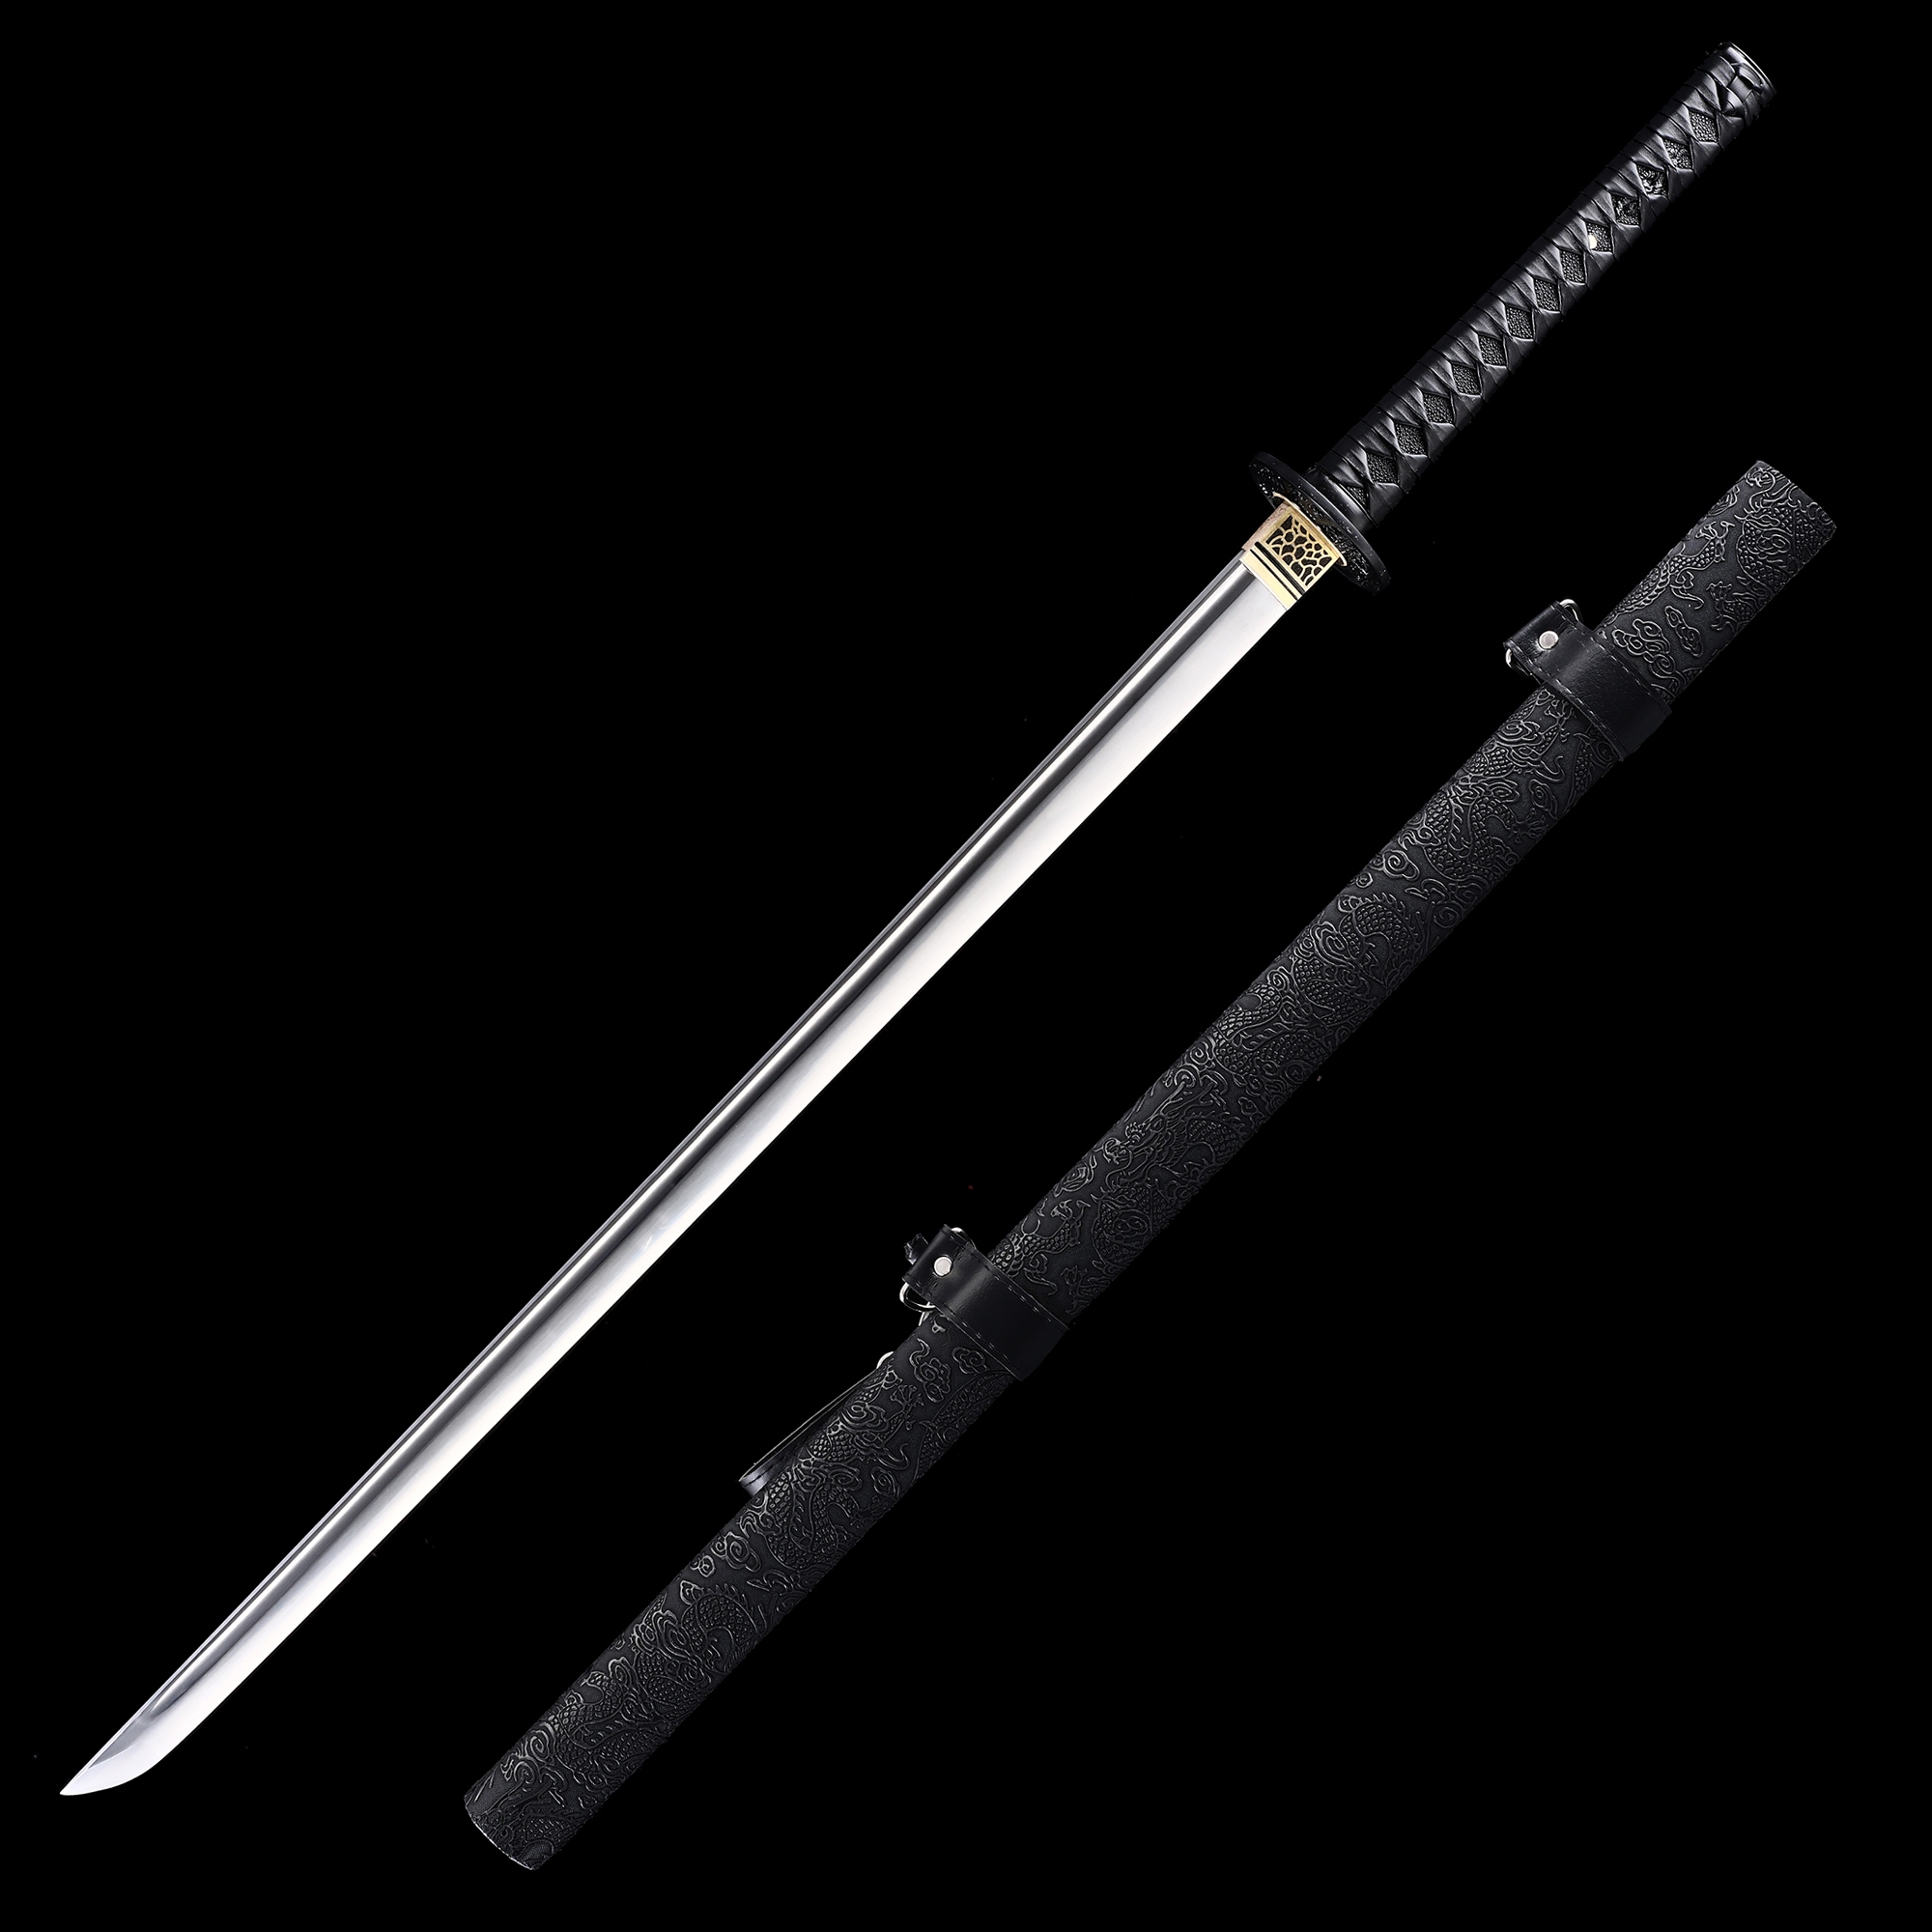 Ninjato Sword | Handmade Japanese Chokuto Ninjato Sword With Black Scabbard  - TrueKatana